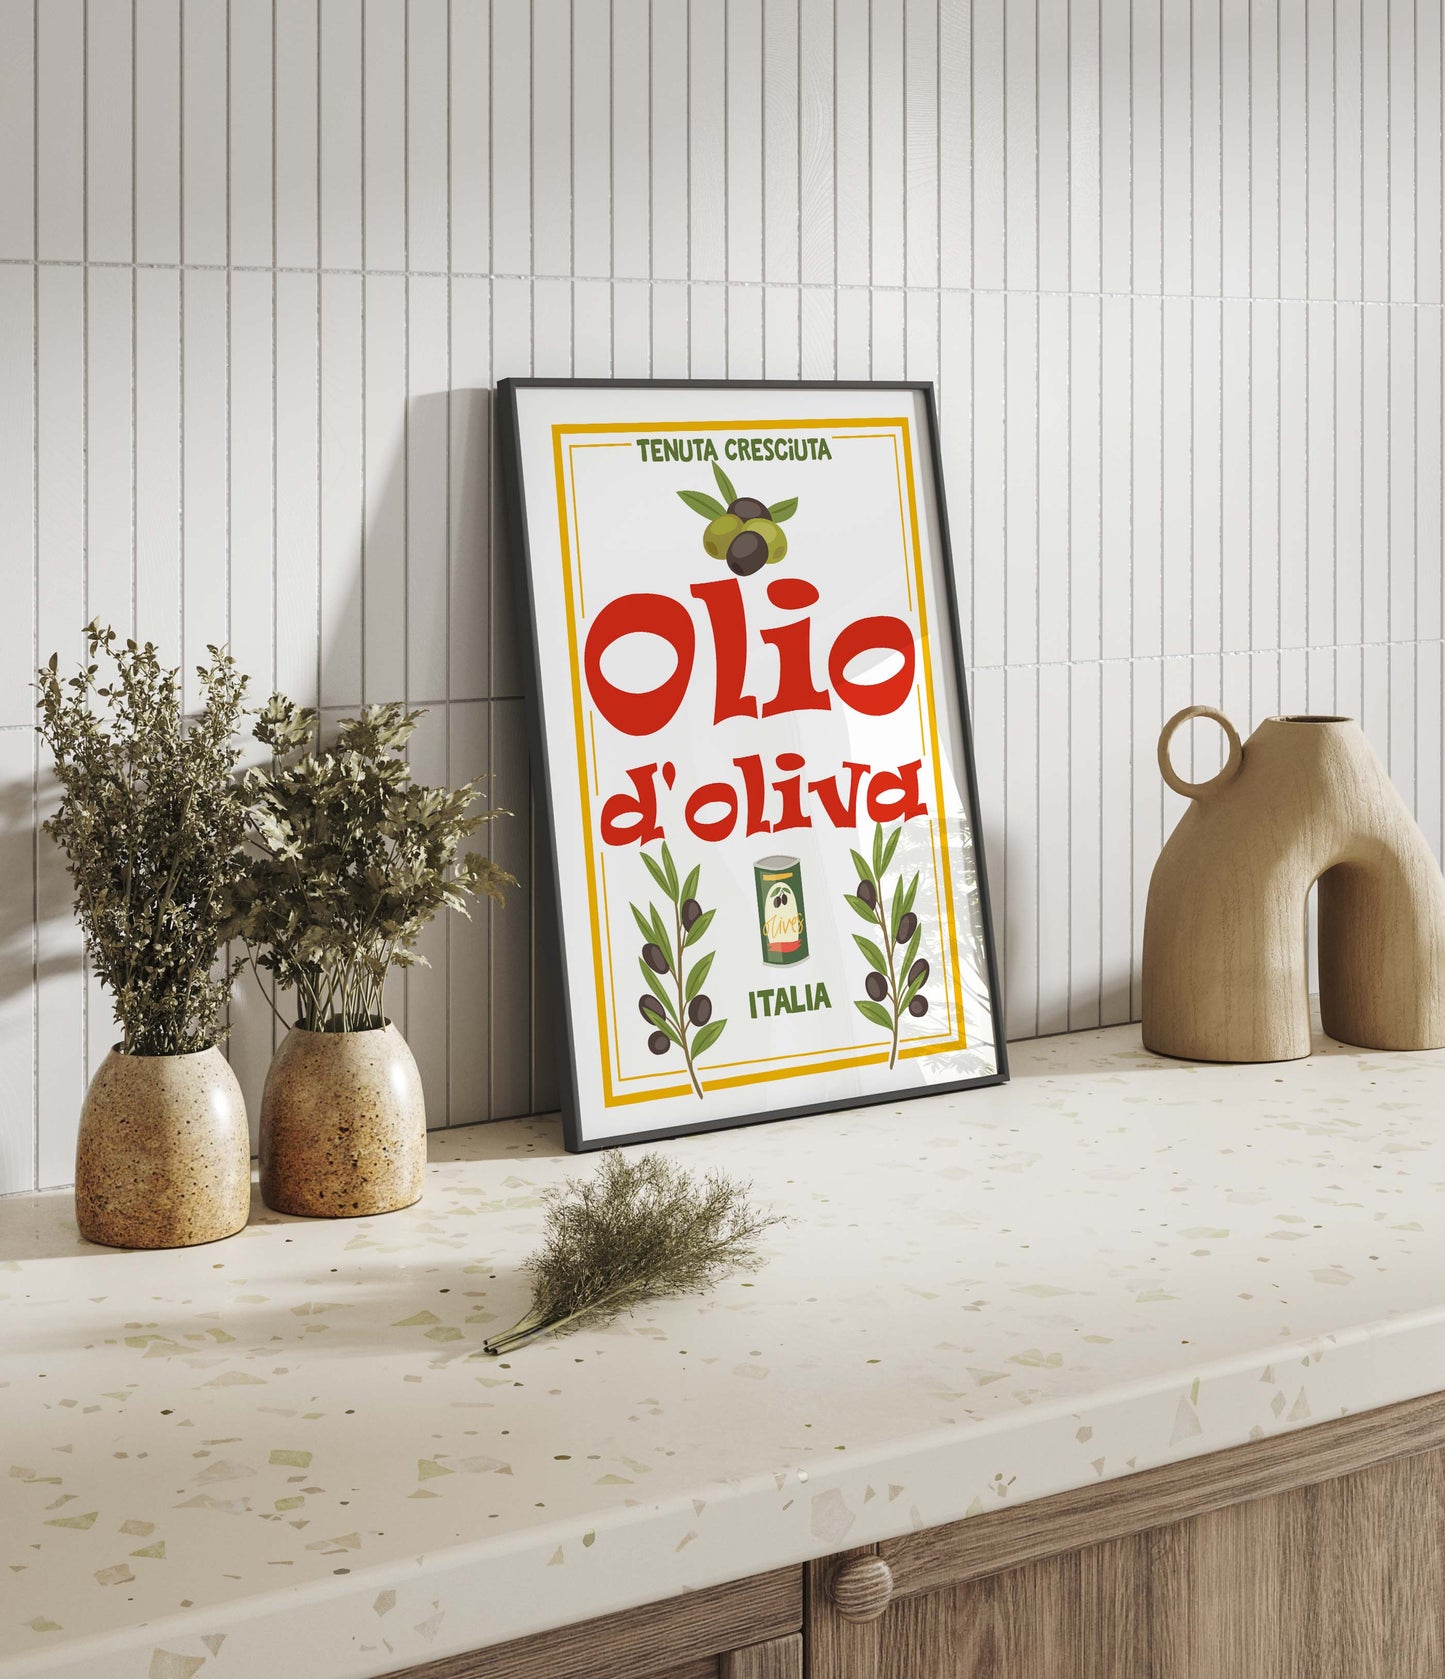 Italian kitchen poster with bold Olio d'oliva typography